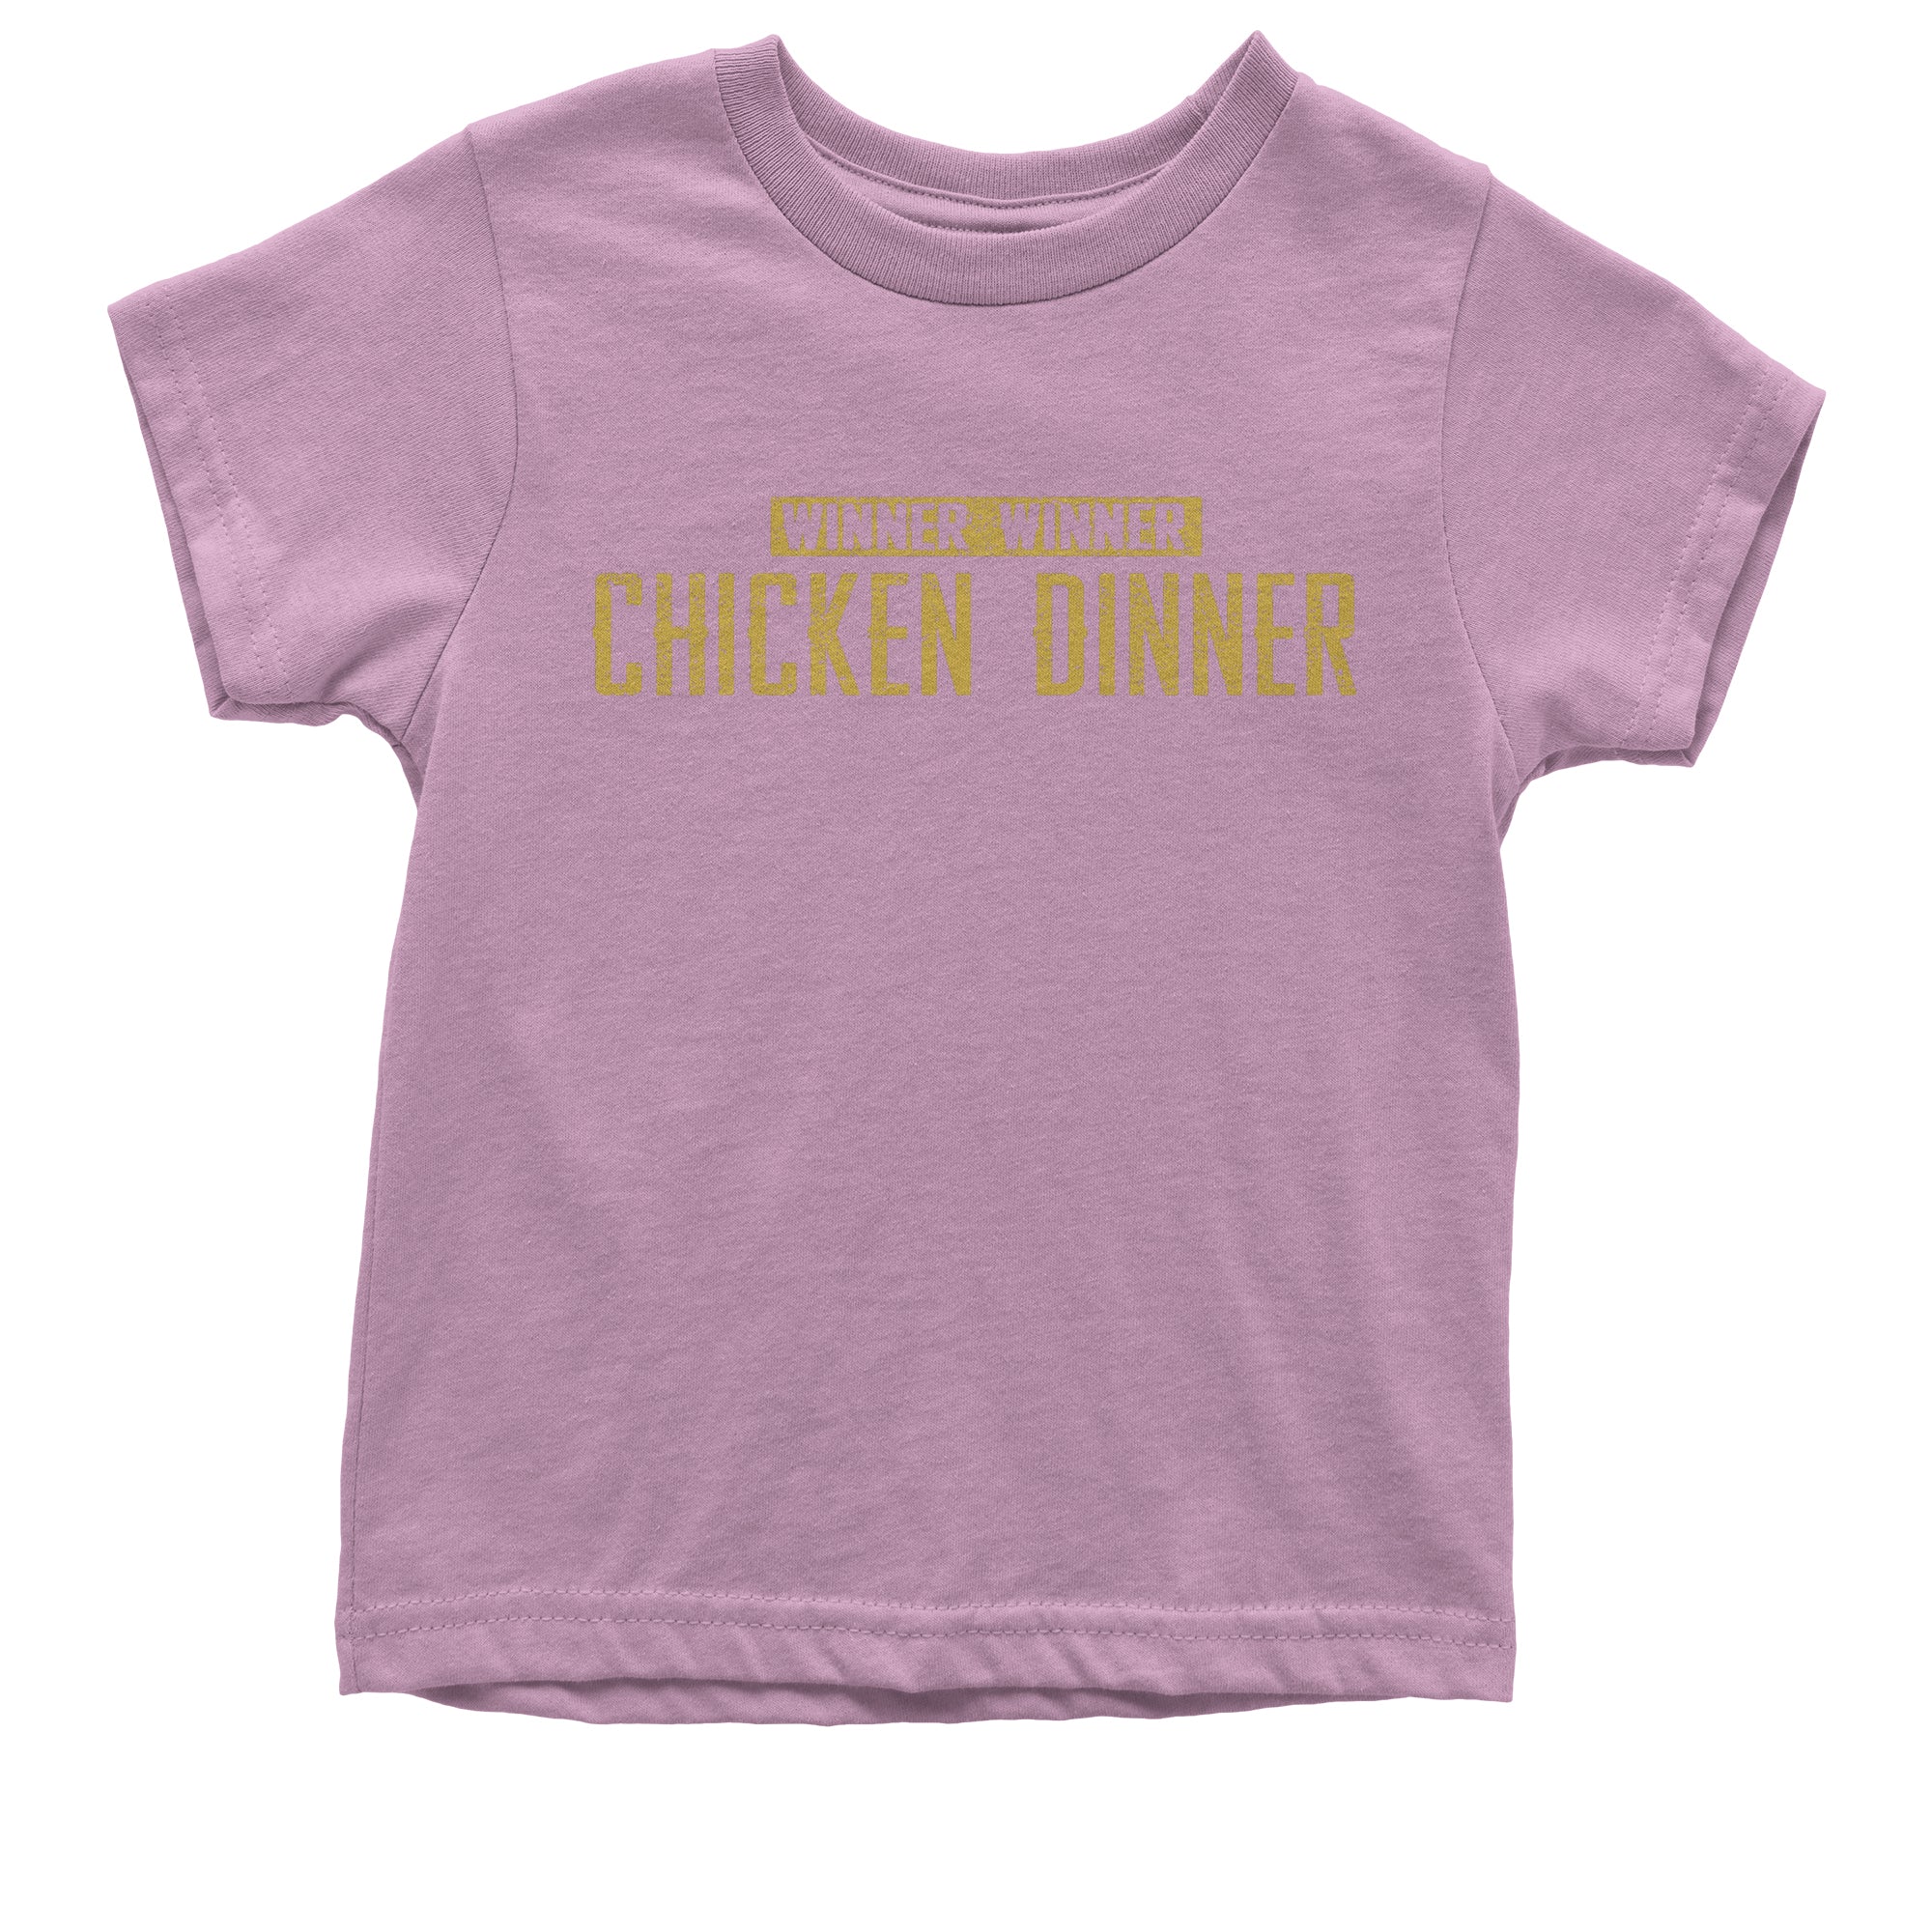 Winner Winner Chicken Dinner Battlegrounds Gamer Kid's T-Shirt